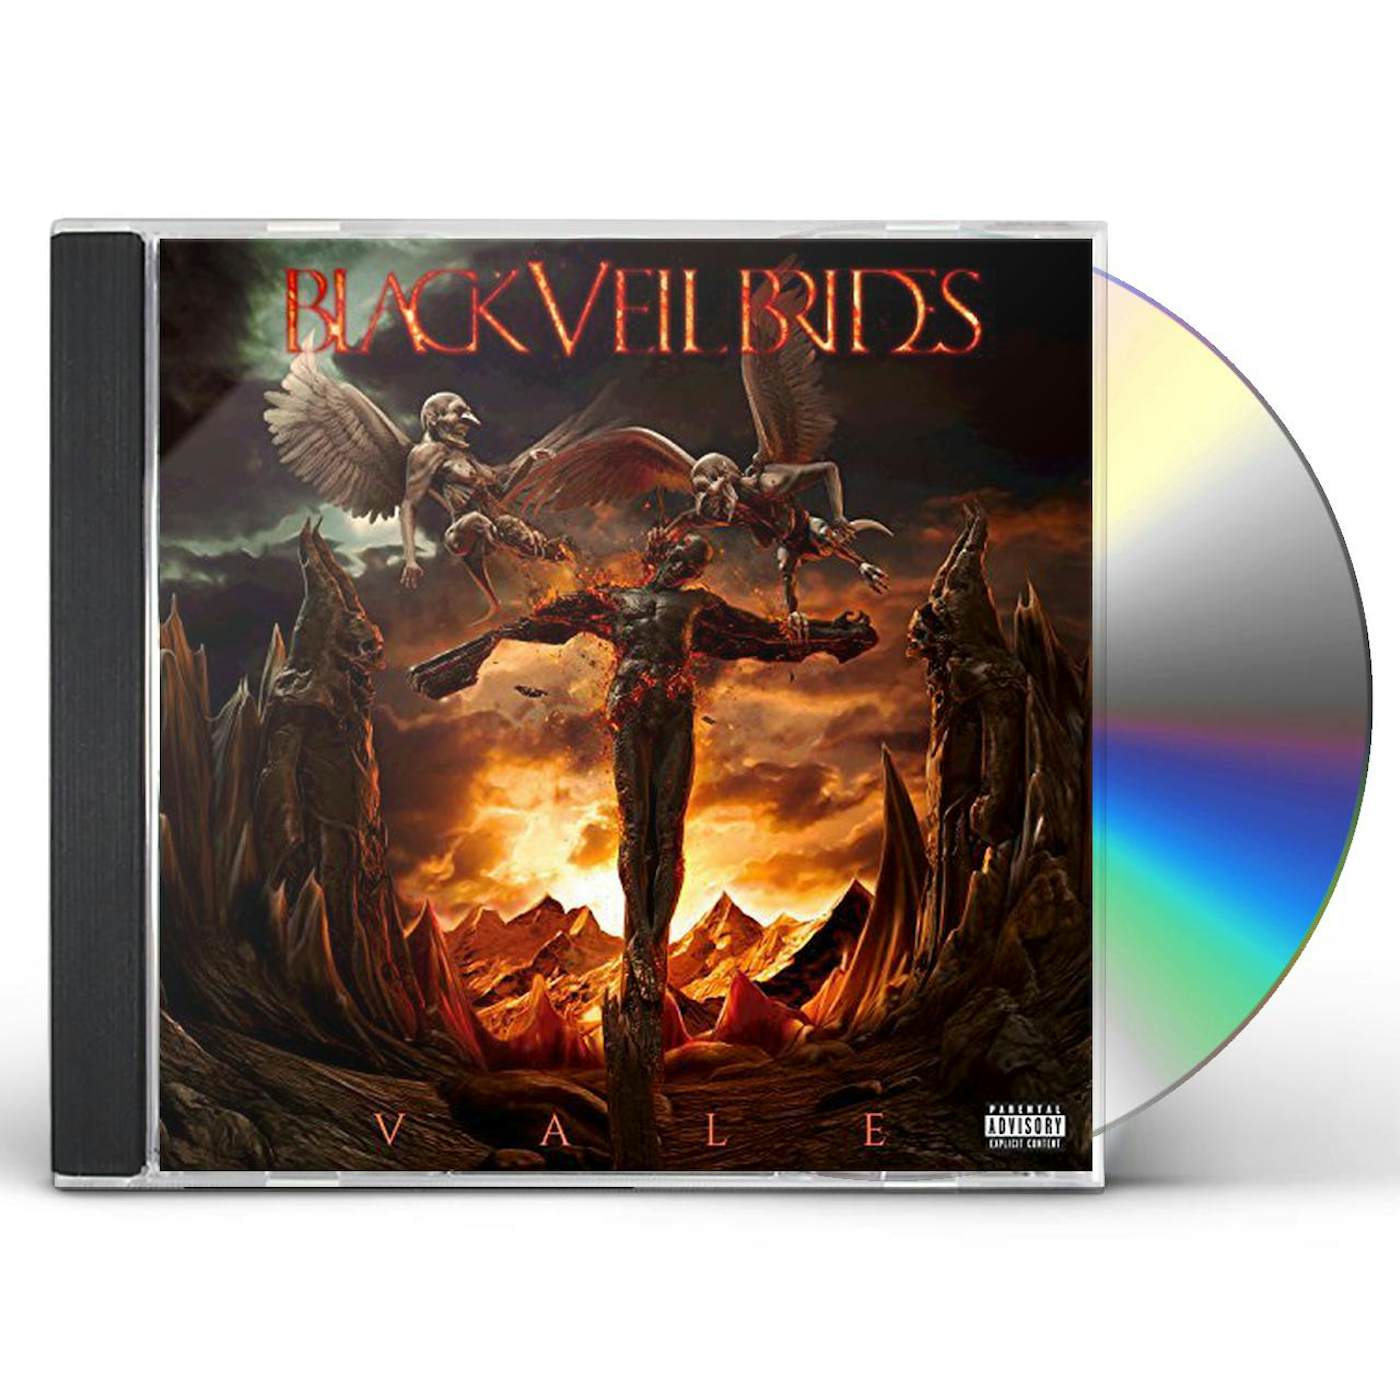 Black Veil Brides VALE CD